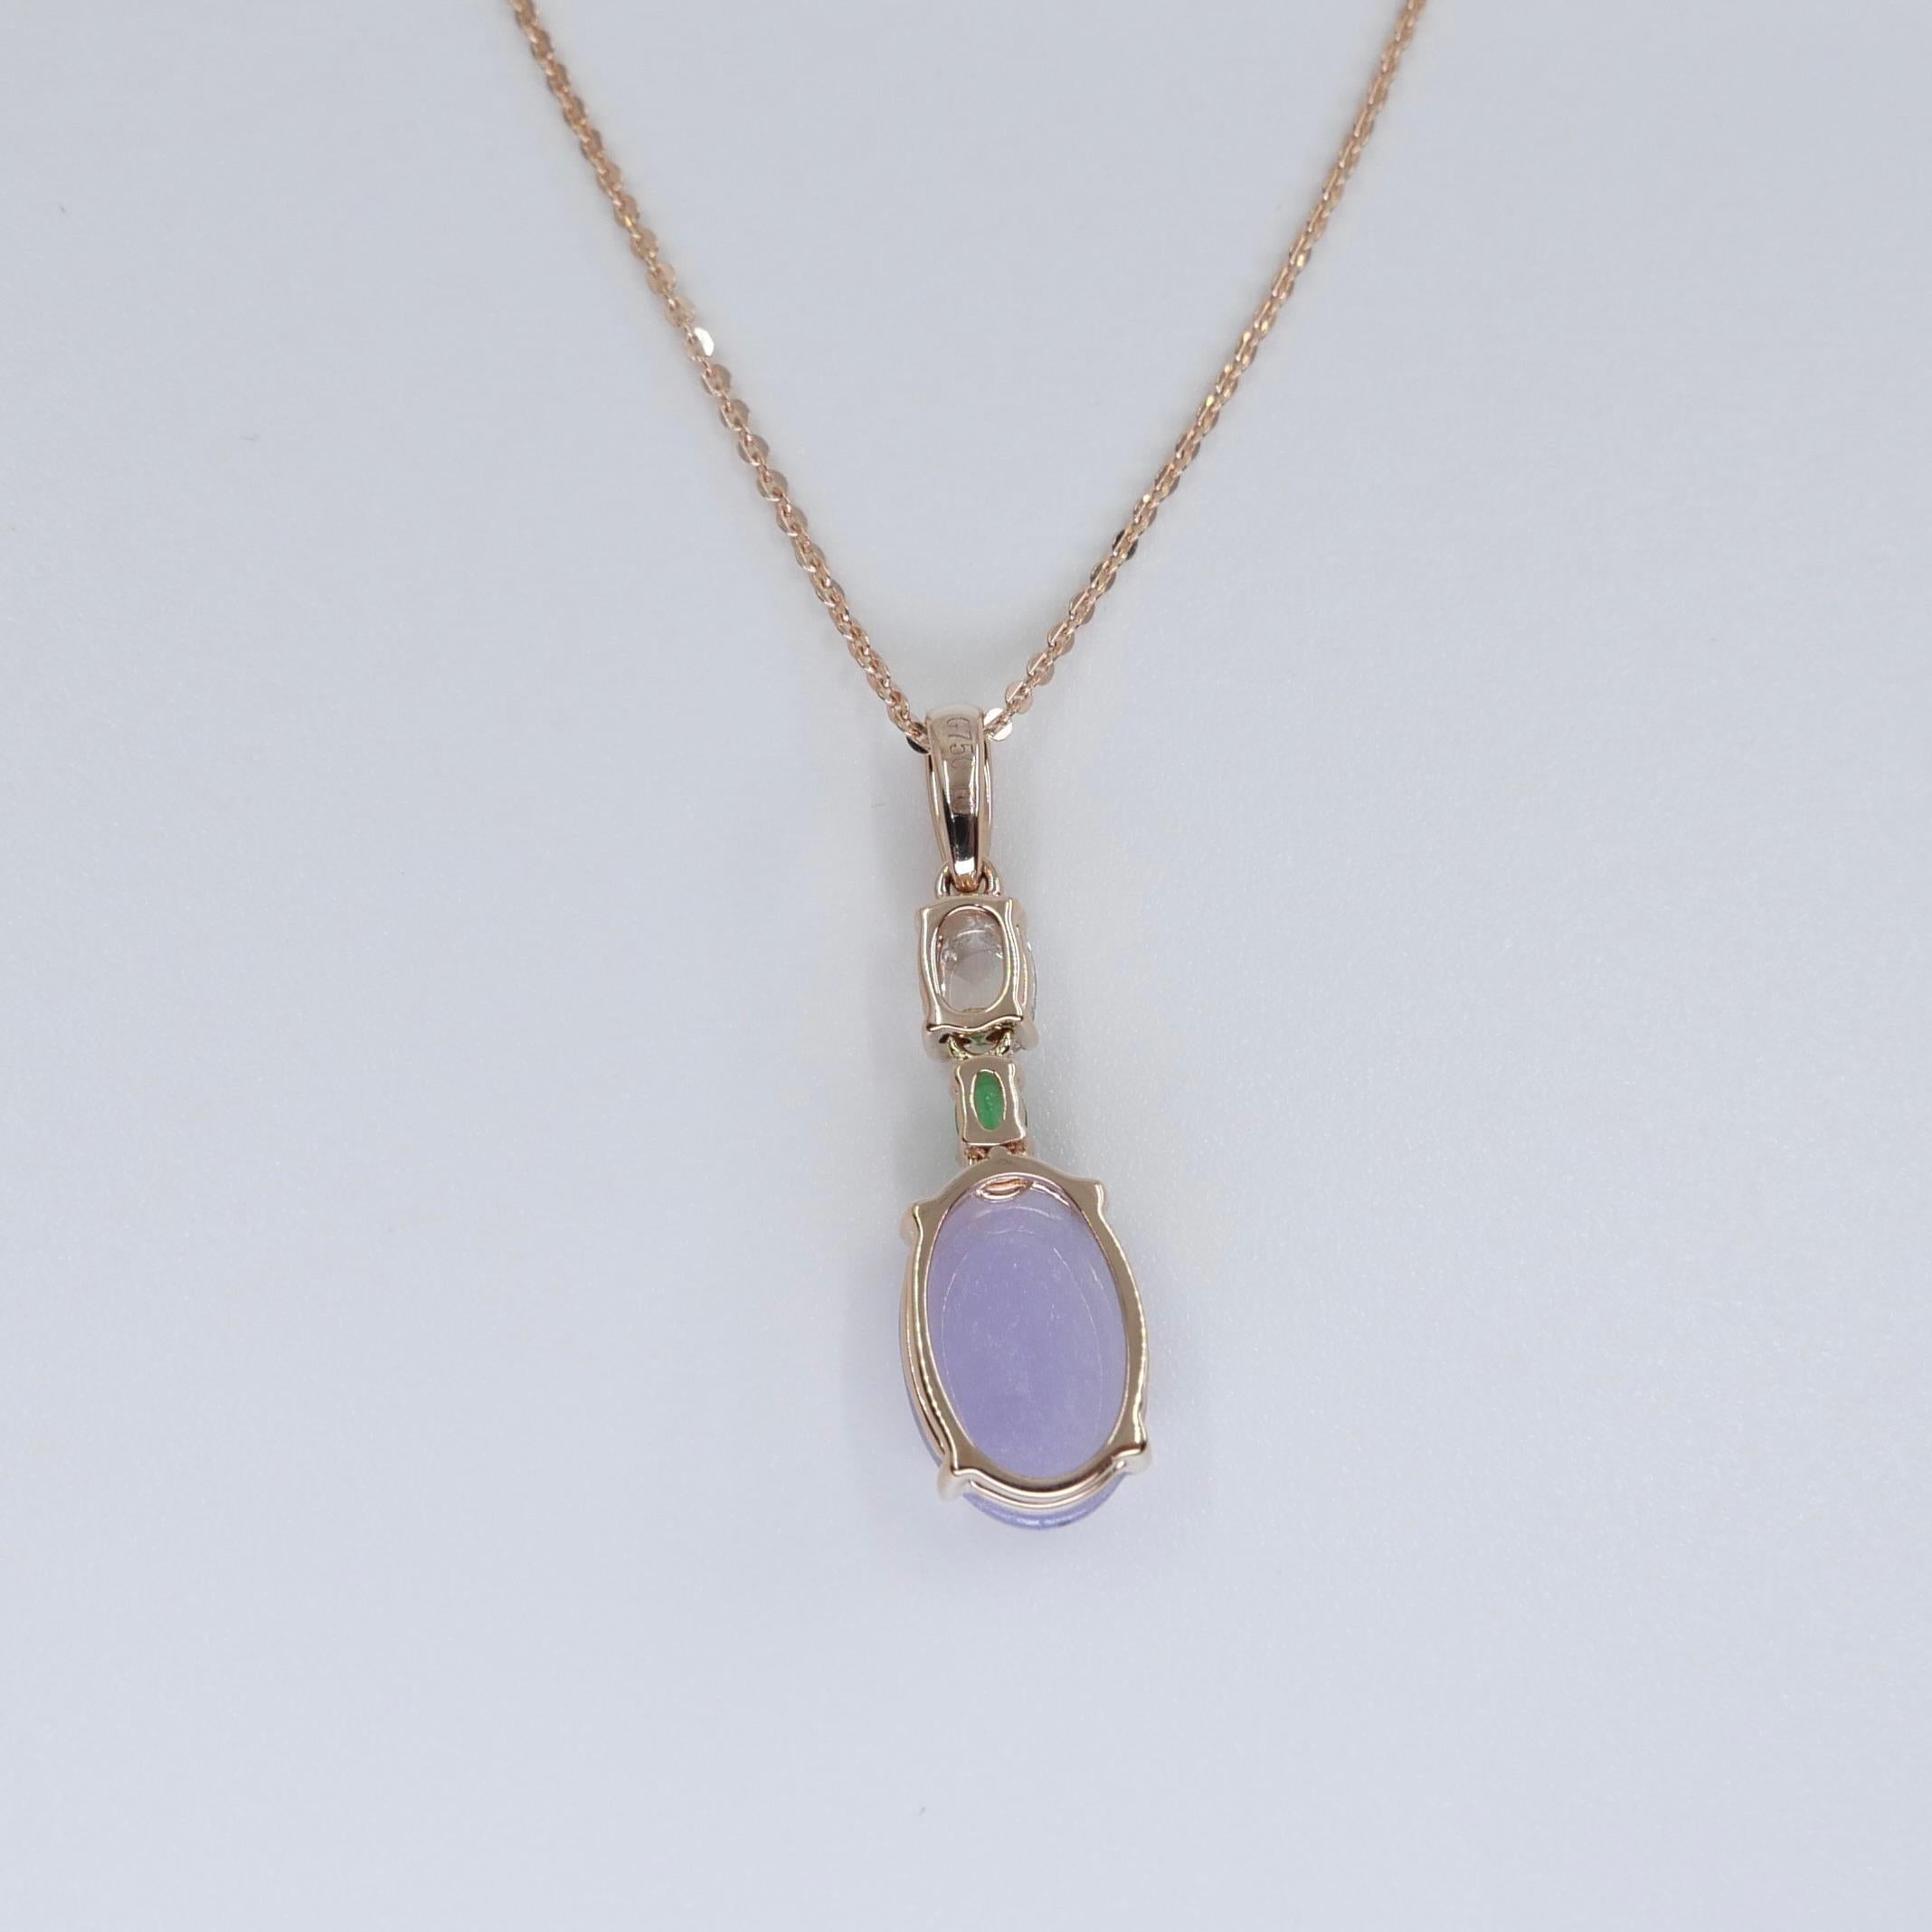 Certified 1.97Cts Lavender Jade & Rose Cut Diamond Drop Pendant Necklace For Sale 2